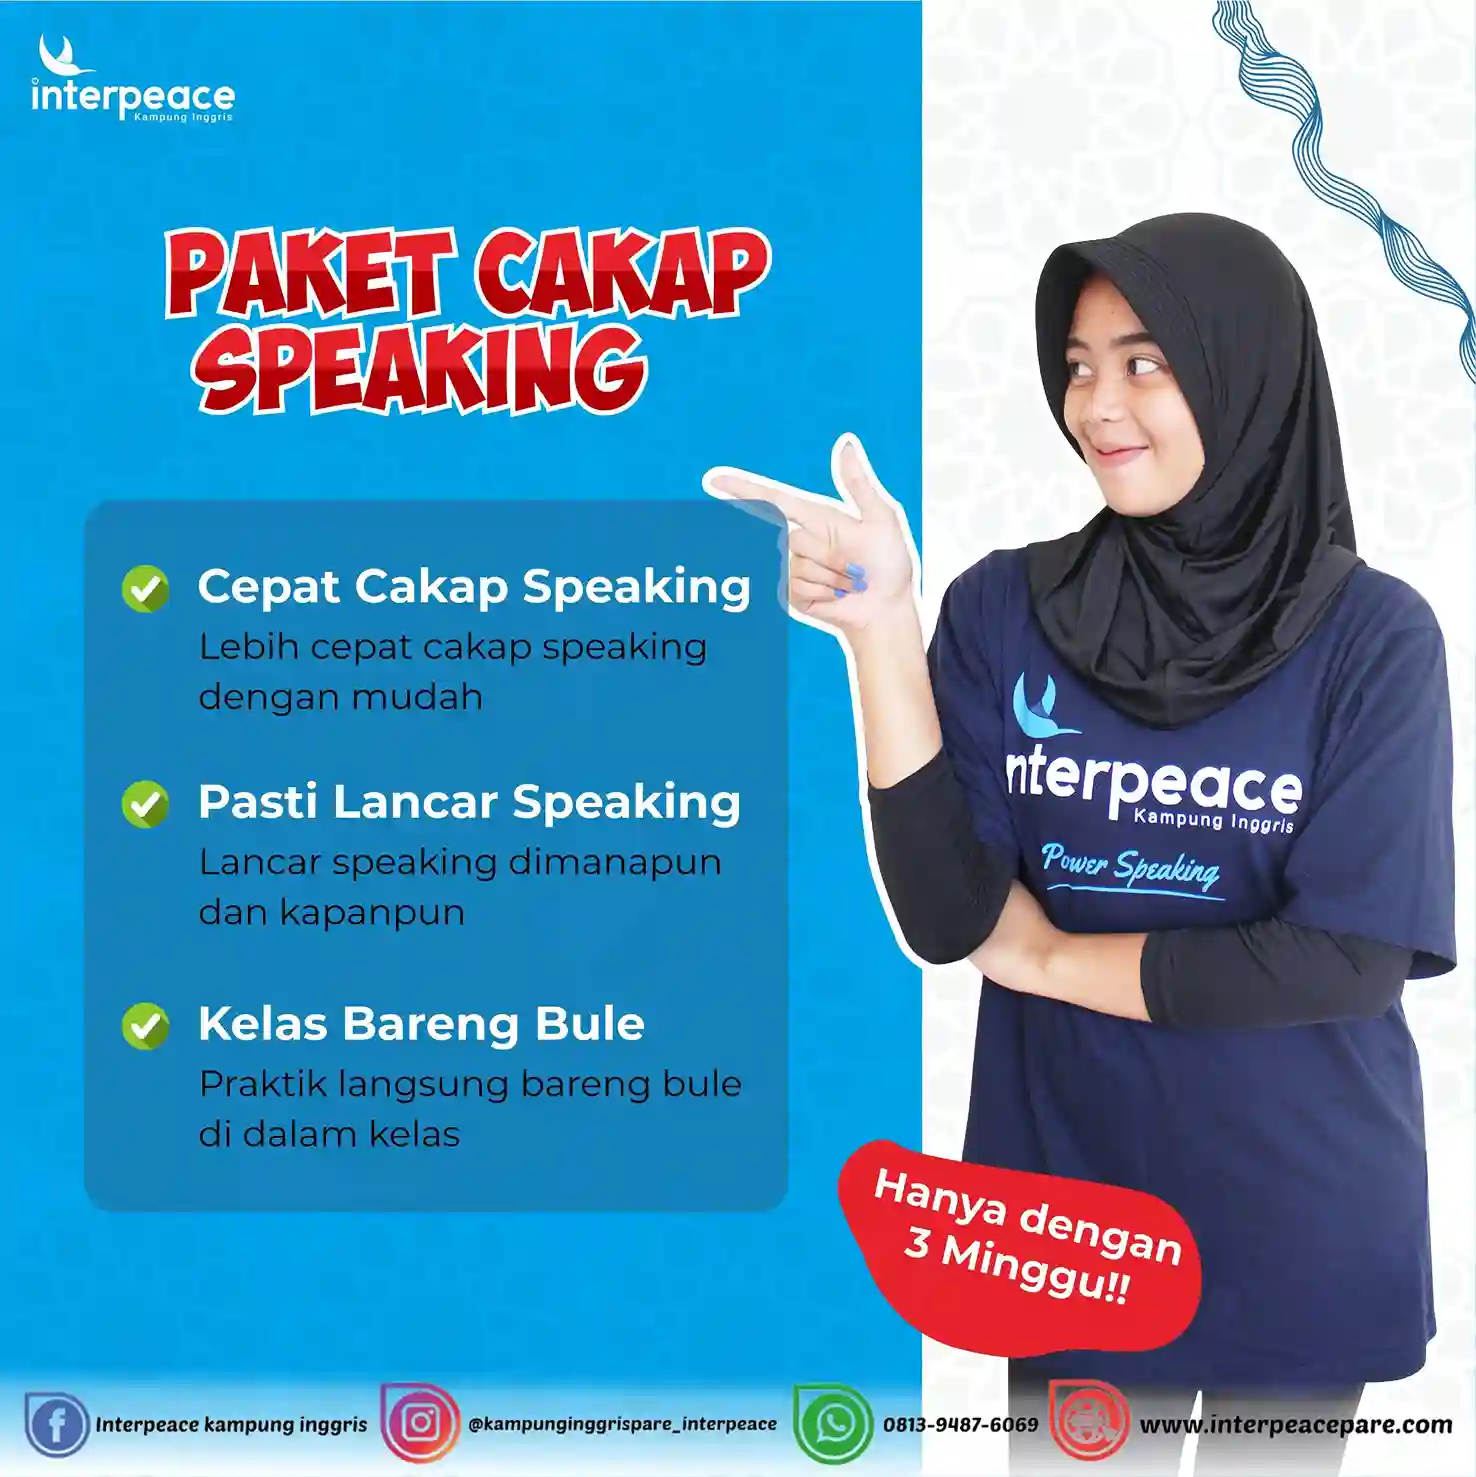 paket cakap speaking interpeace